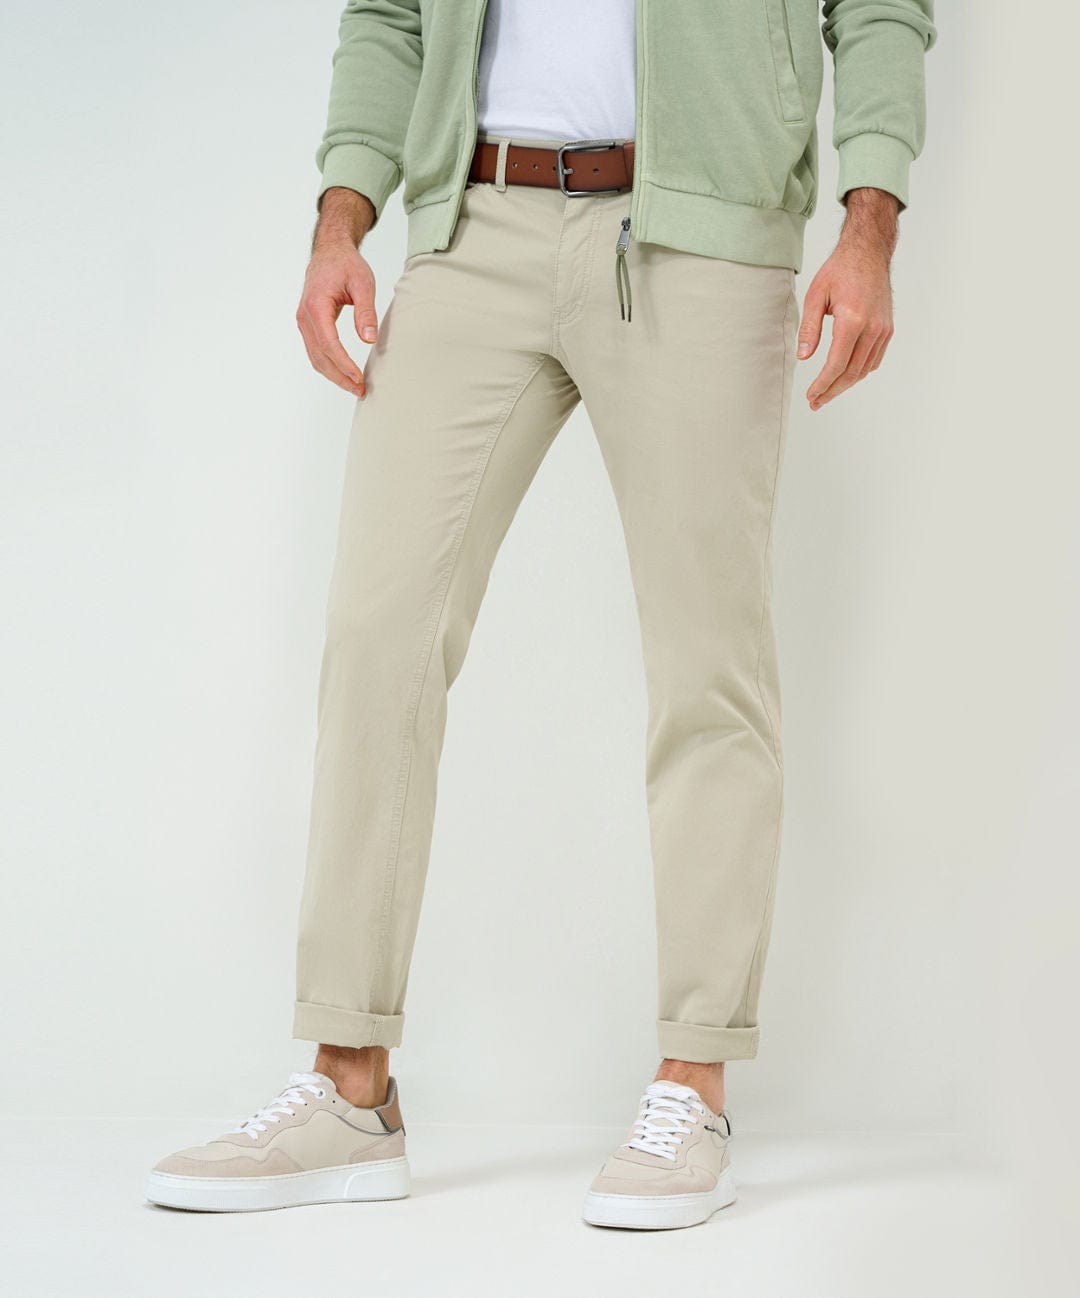 Mens Dress Pants in Mens Pants | Black - Walmart.com